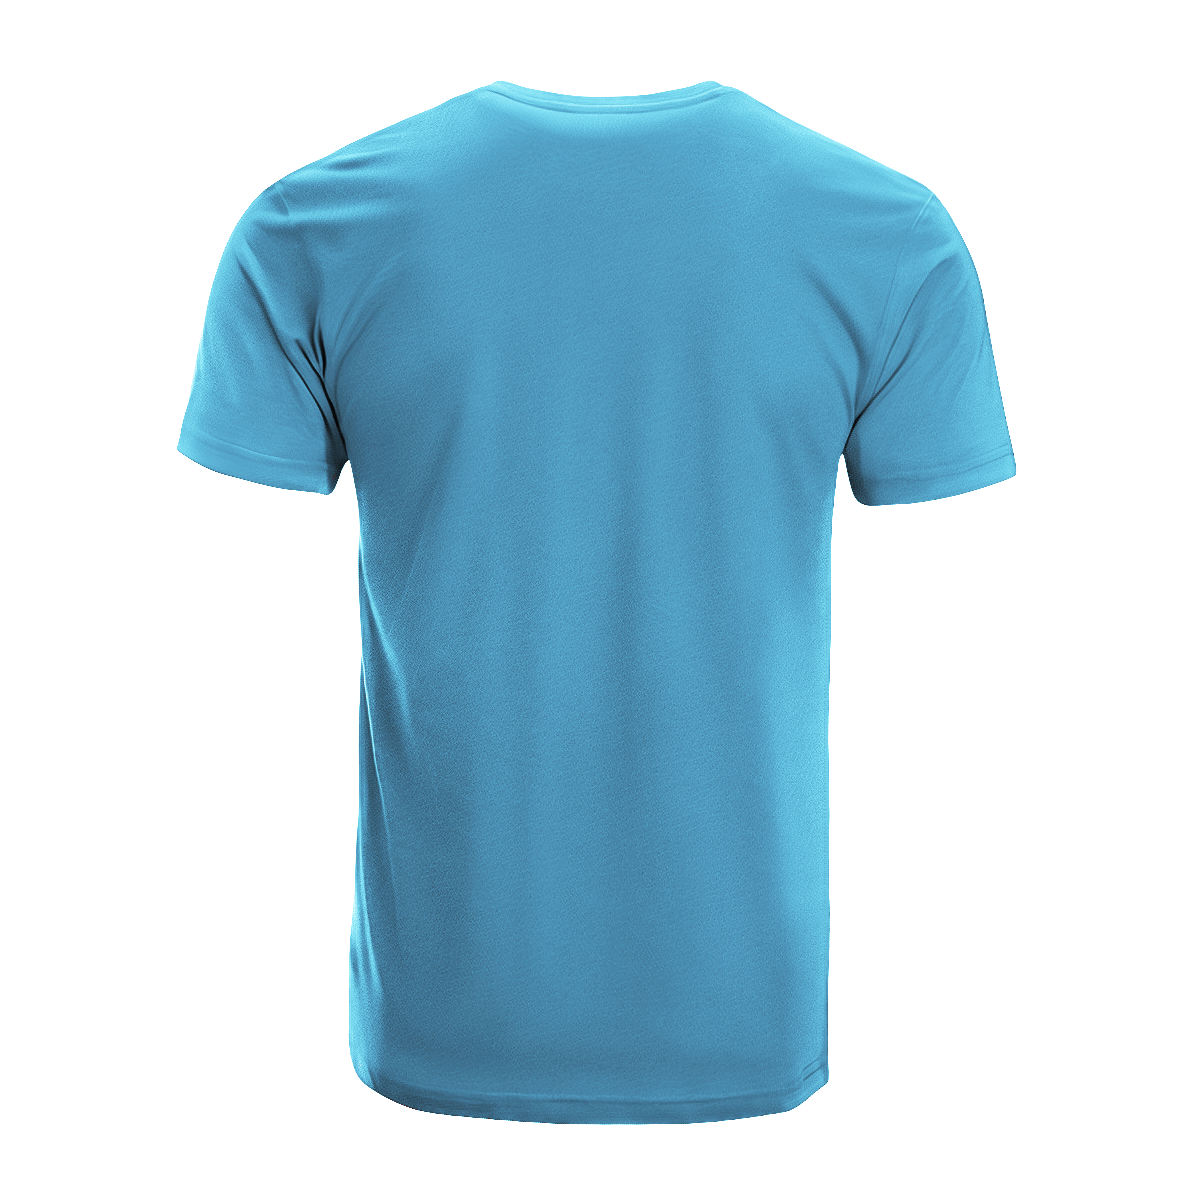 Abercrombie Tartan Crest T-shirt - I'm not yelling style